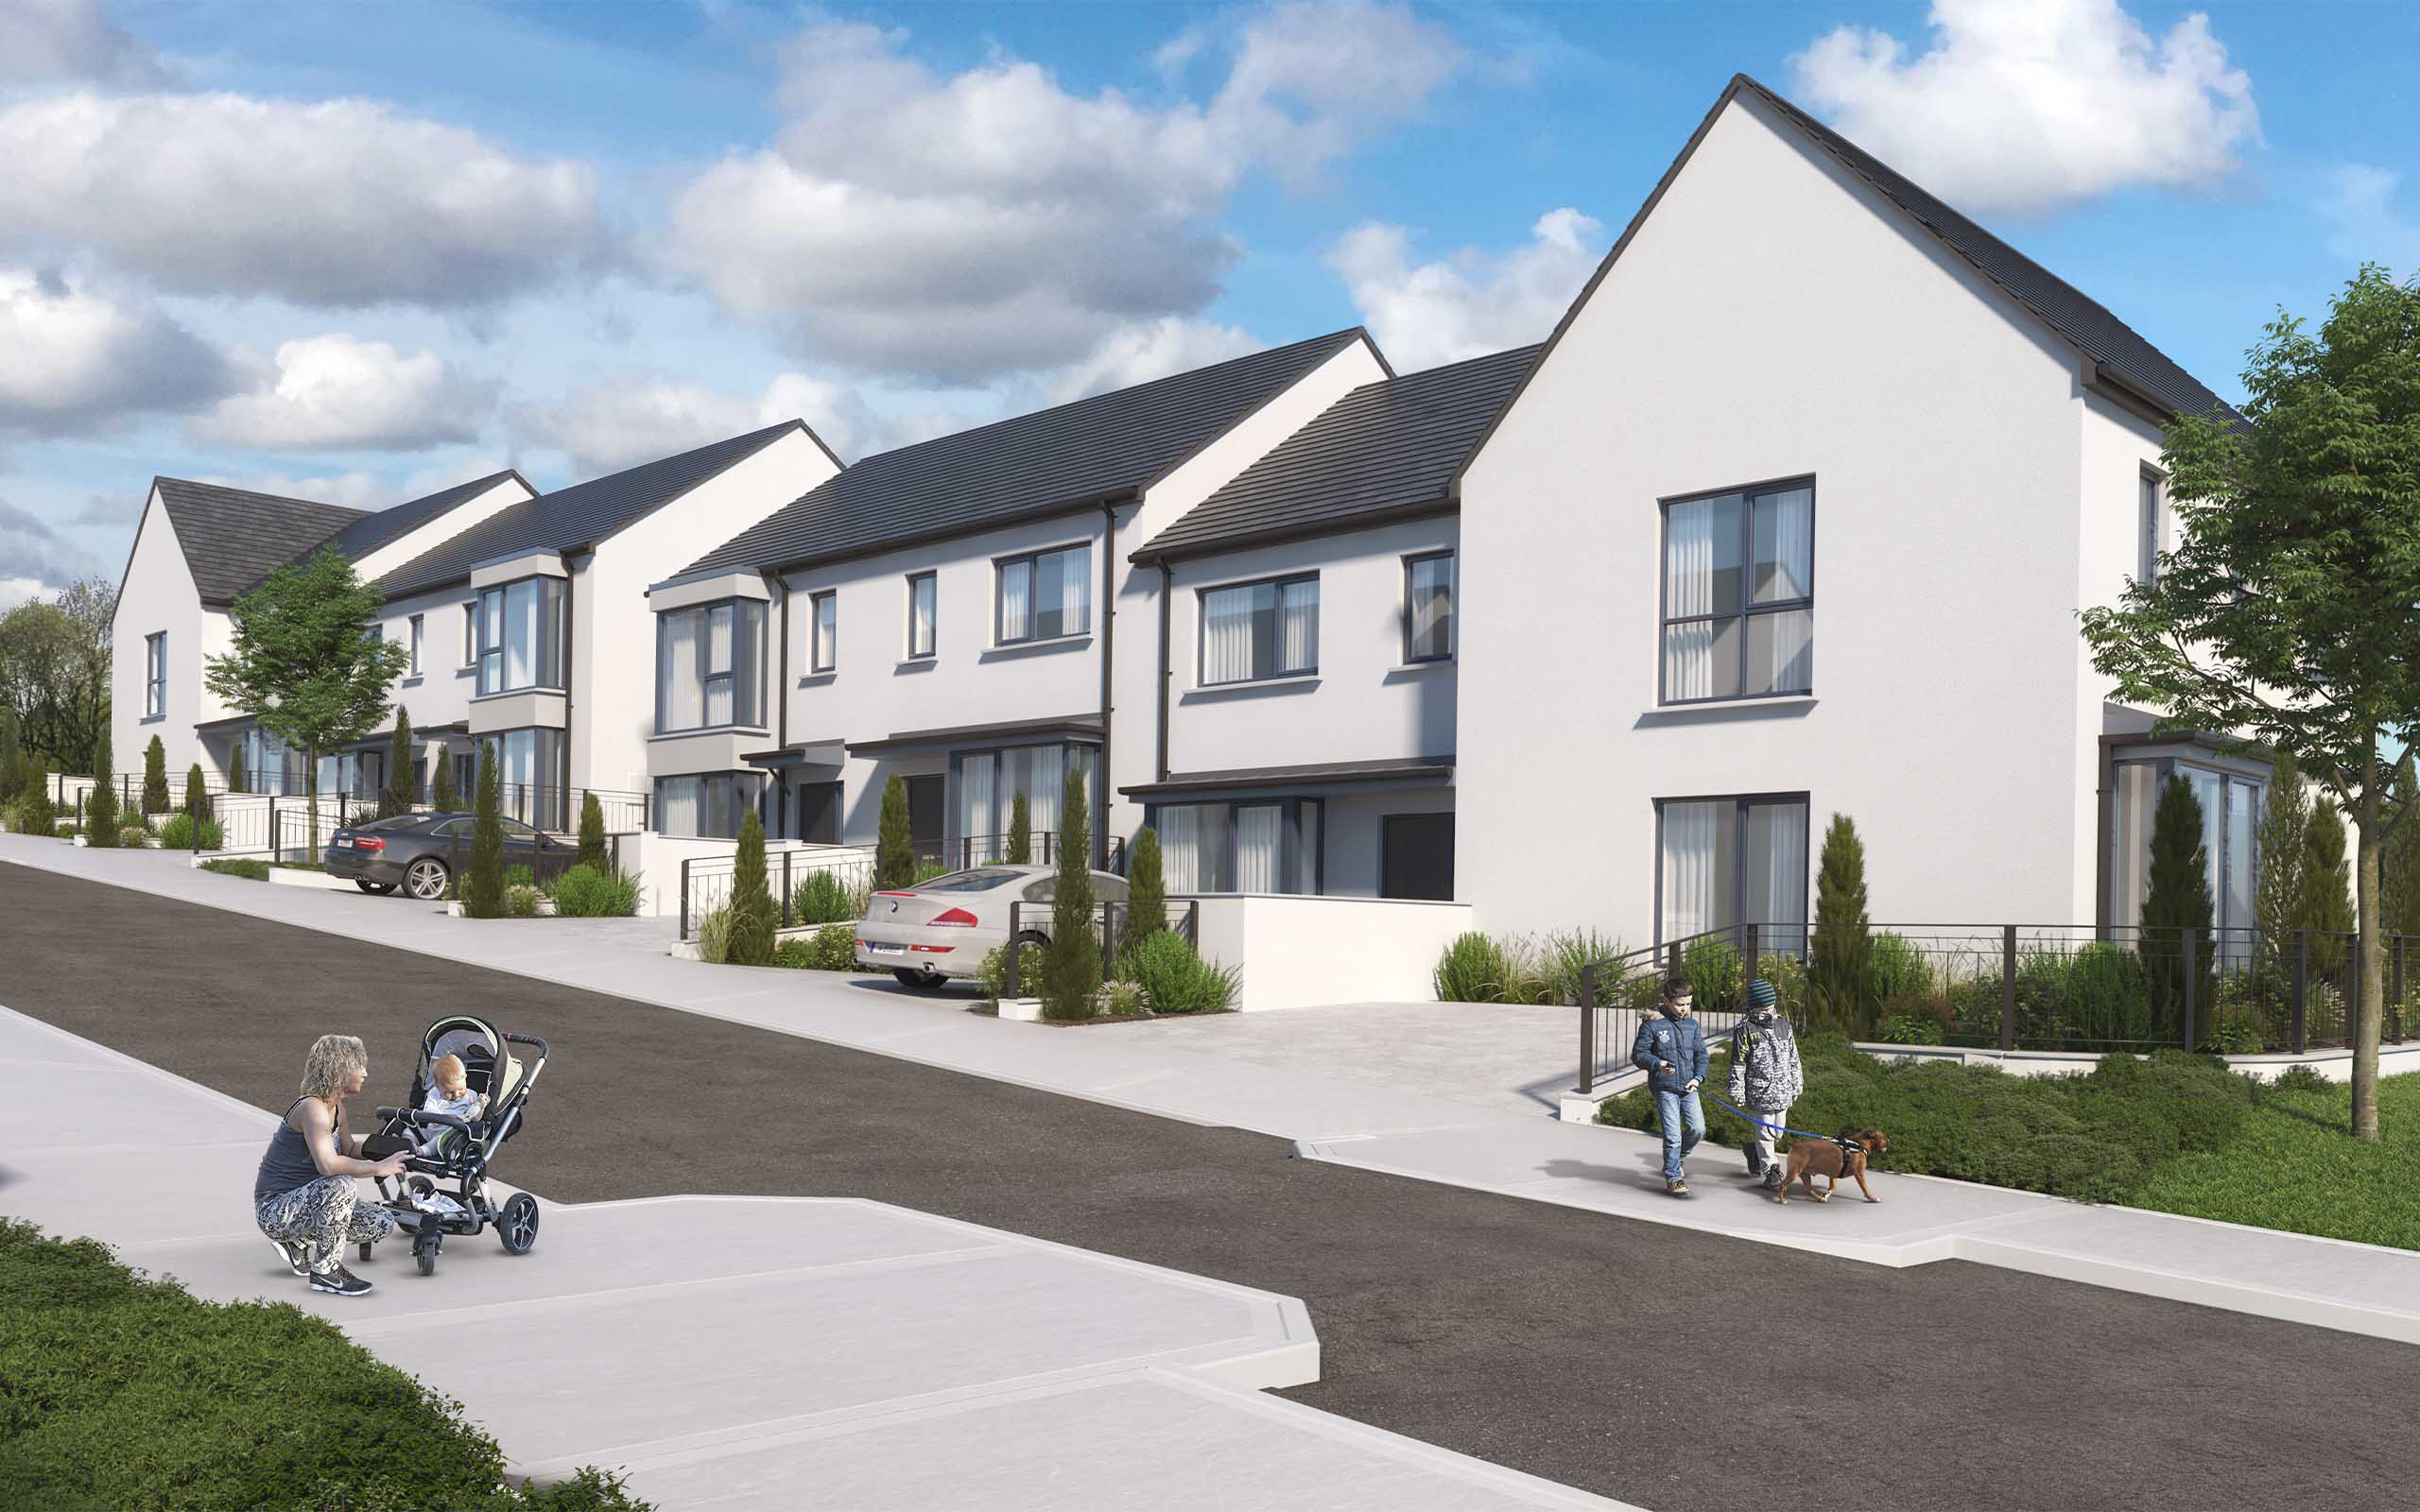 Architectural CGI of Housing Development in Ballinglanna, Glanmire